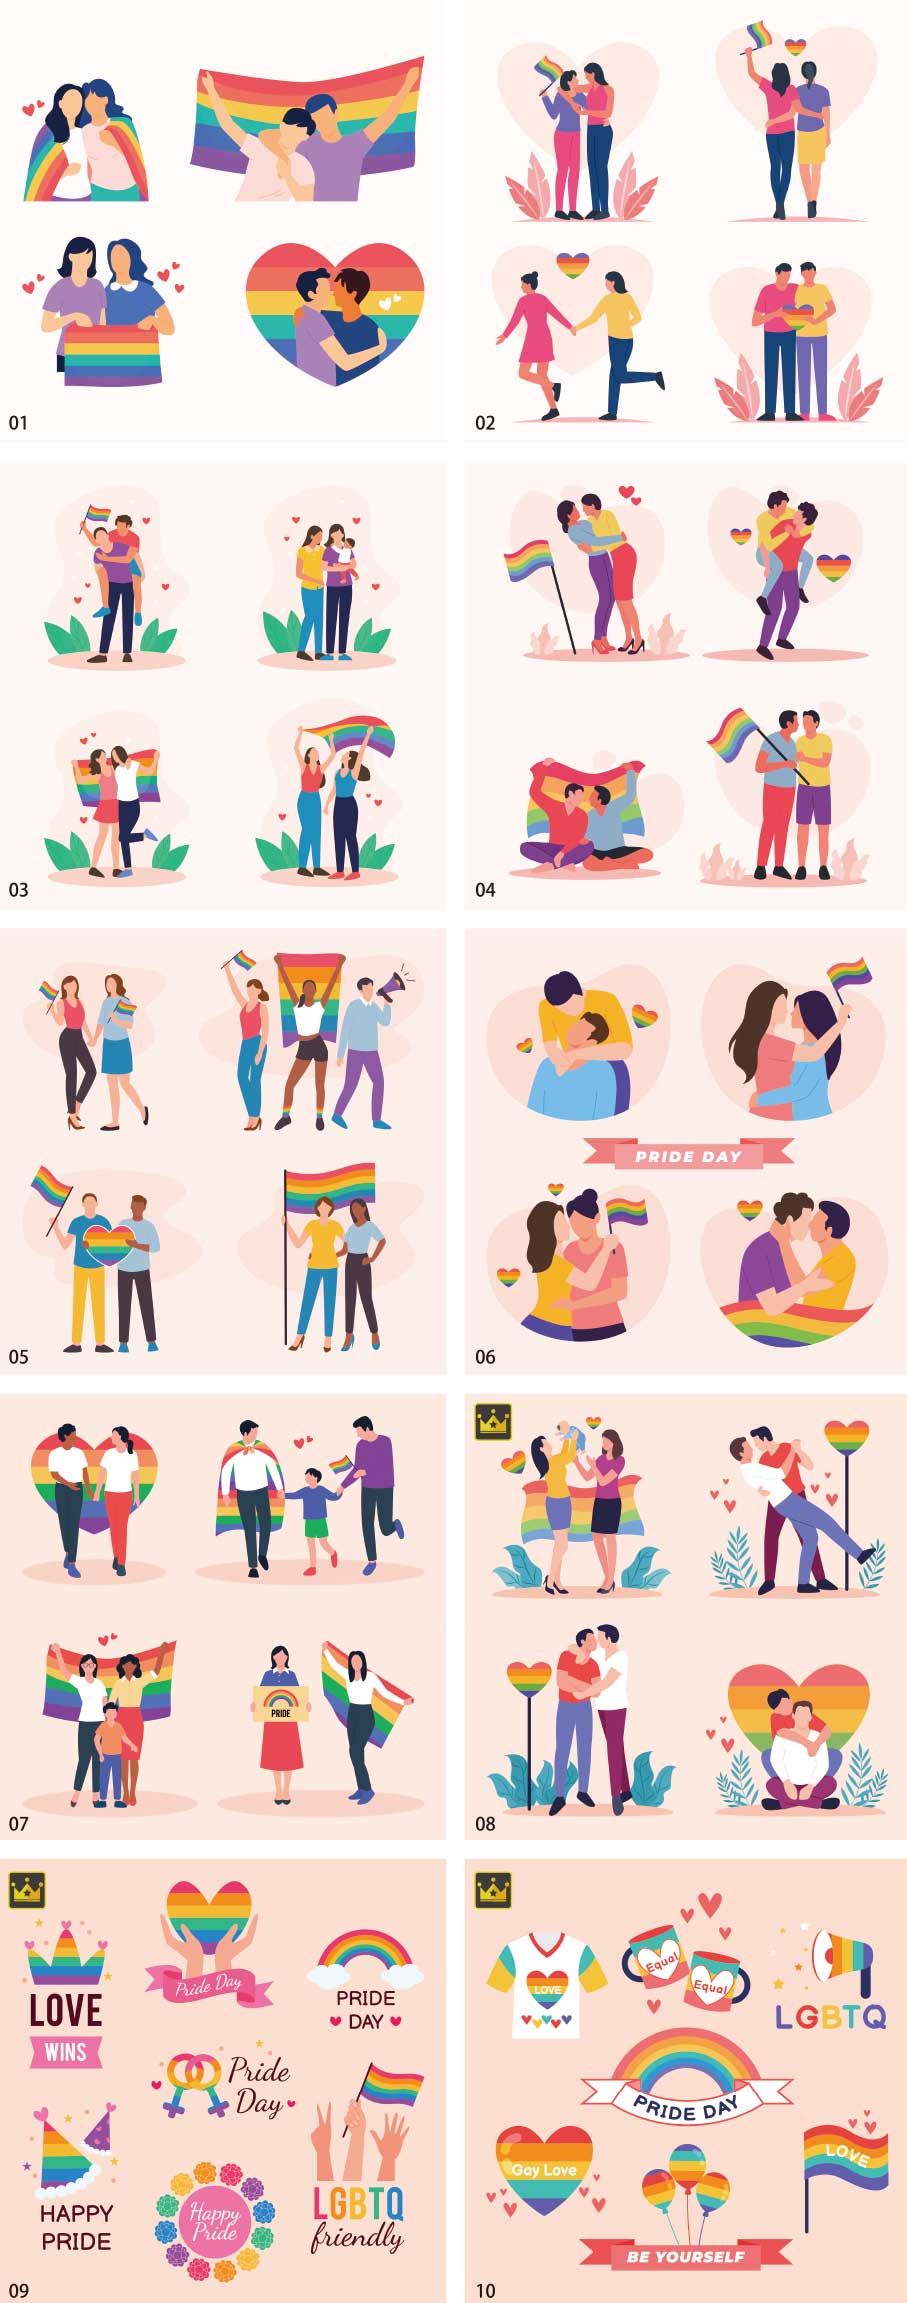 Rainbow pride illustration collection